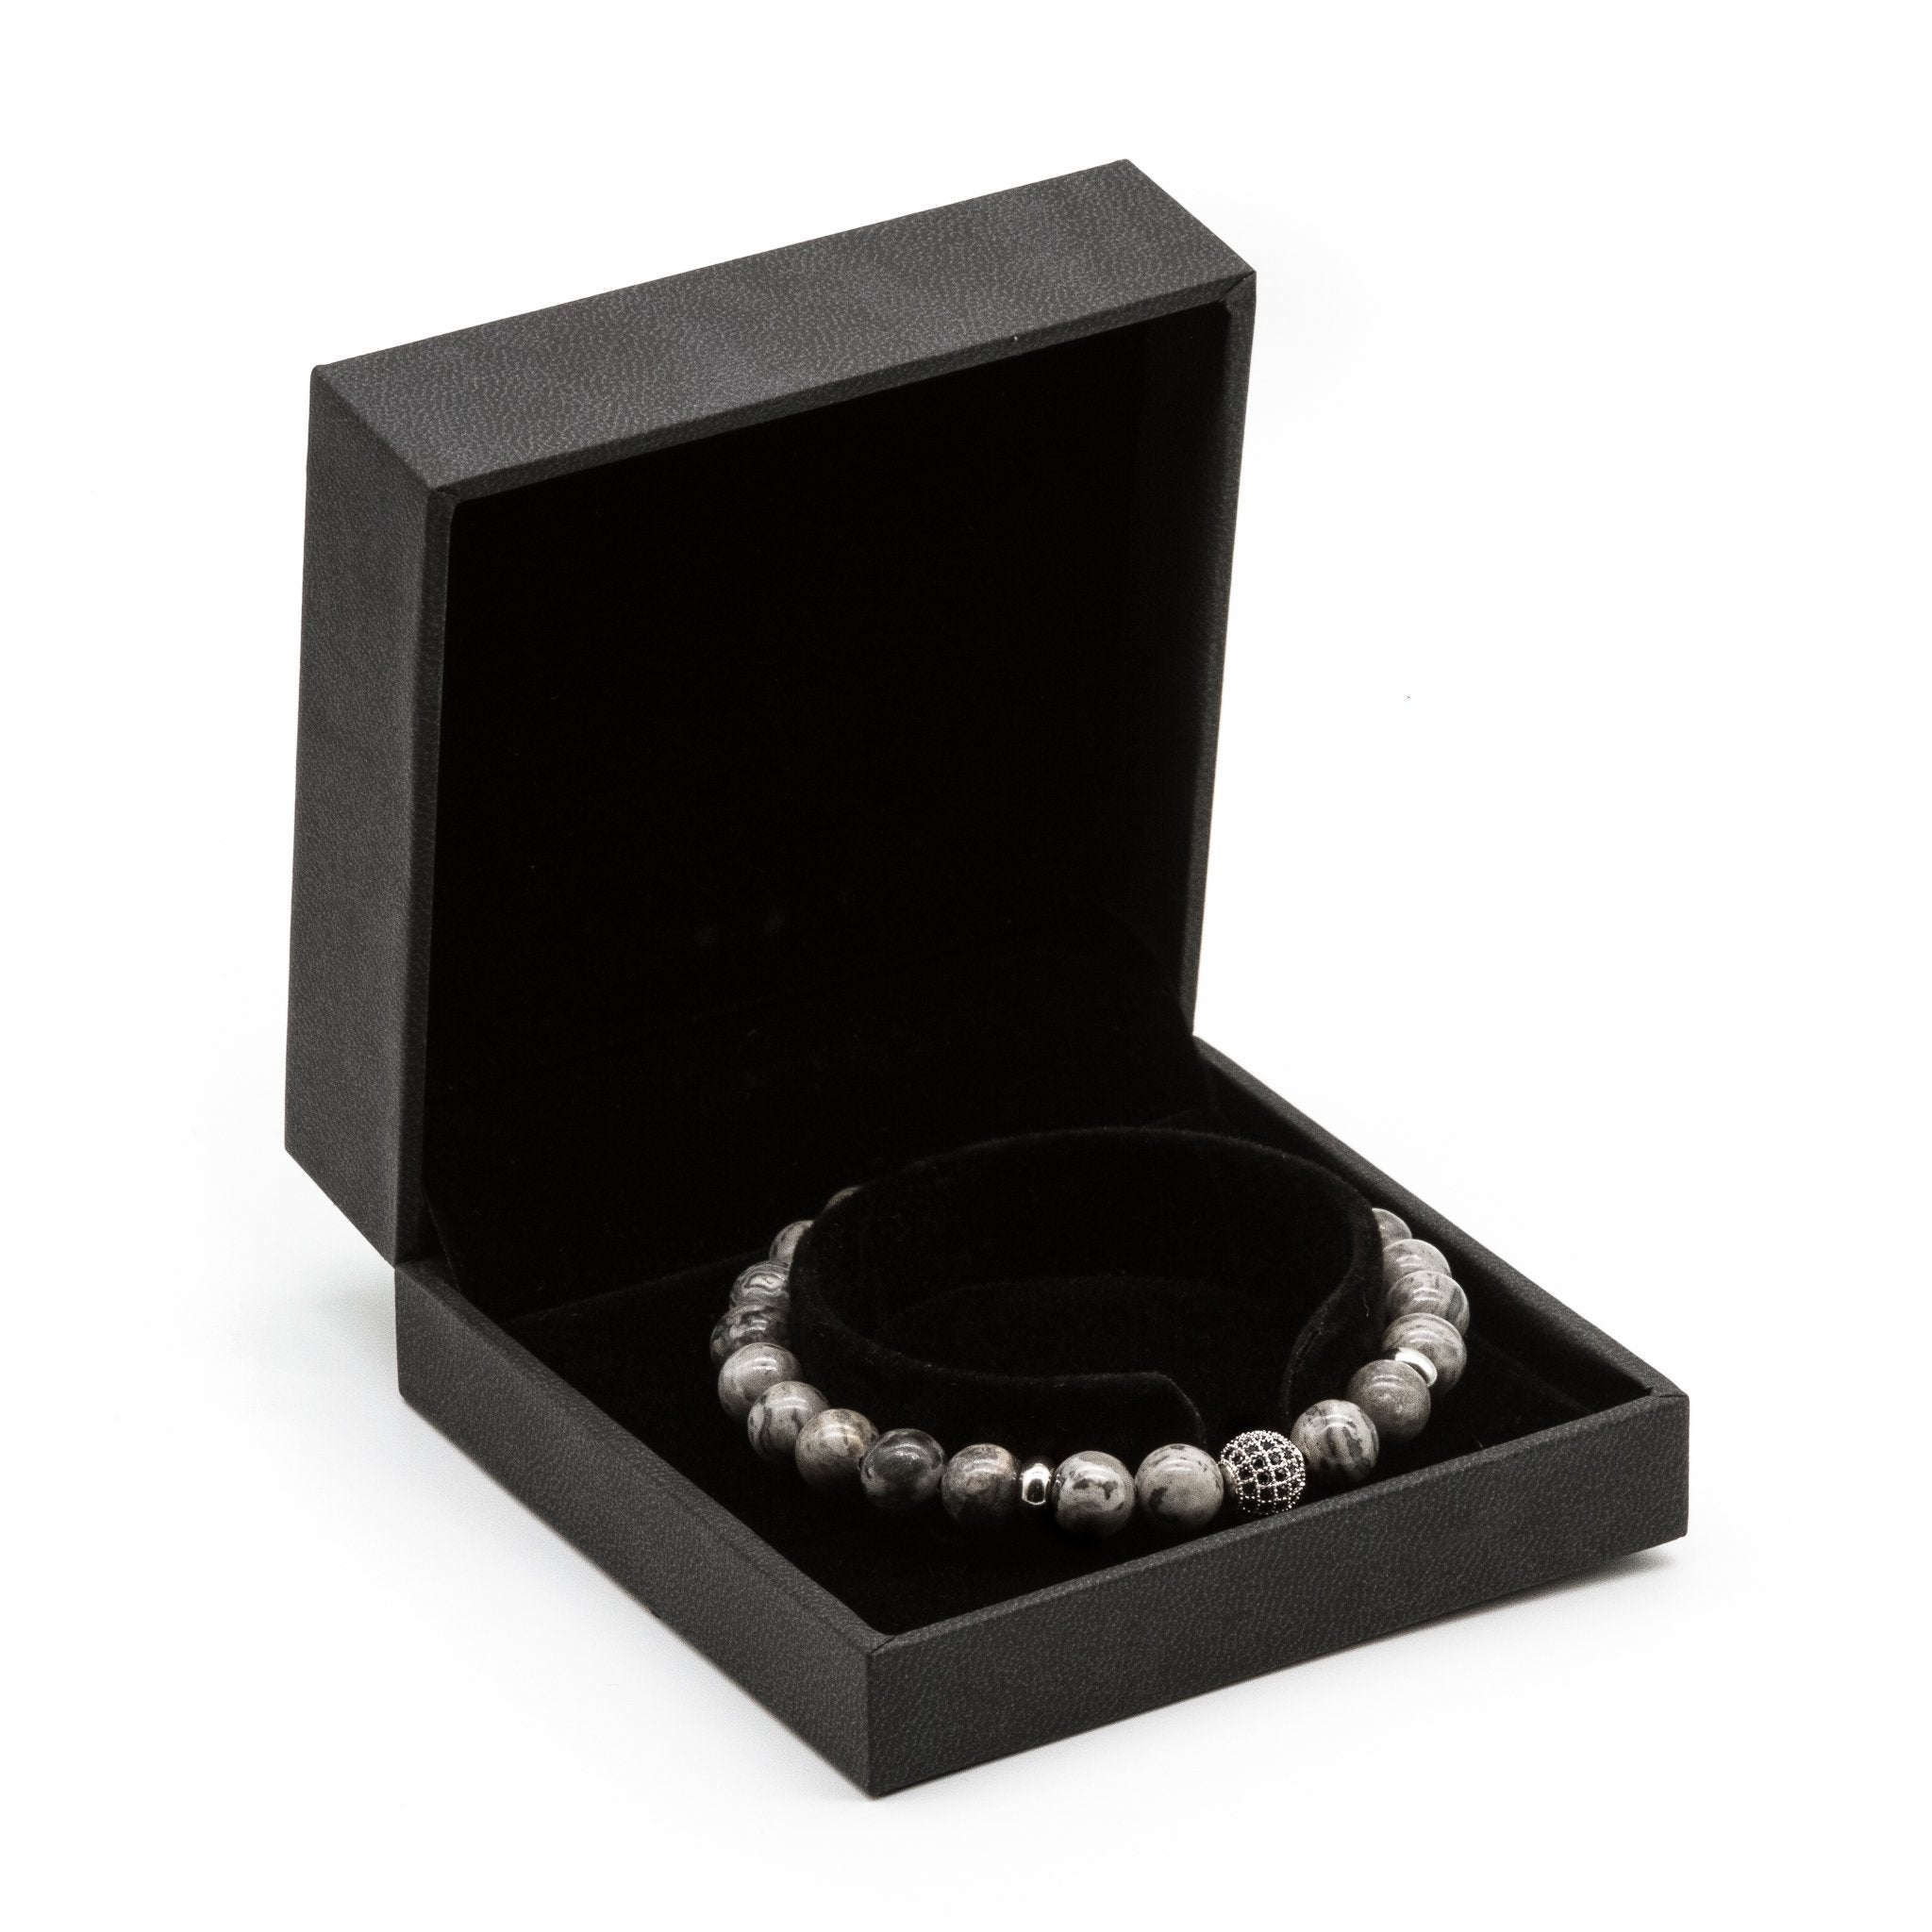 UNCOMMON Men's Beads Bracelet One Gold Jeweled Globe Charm Grey Jasper Beads